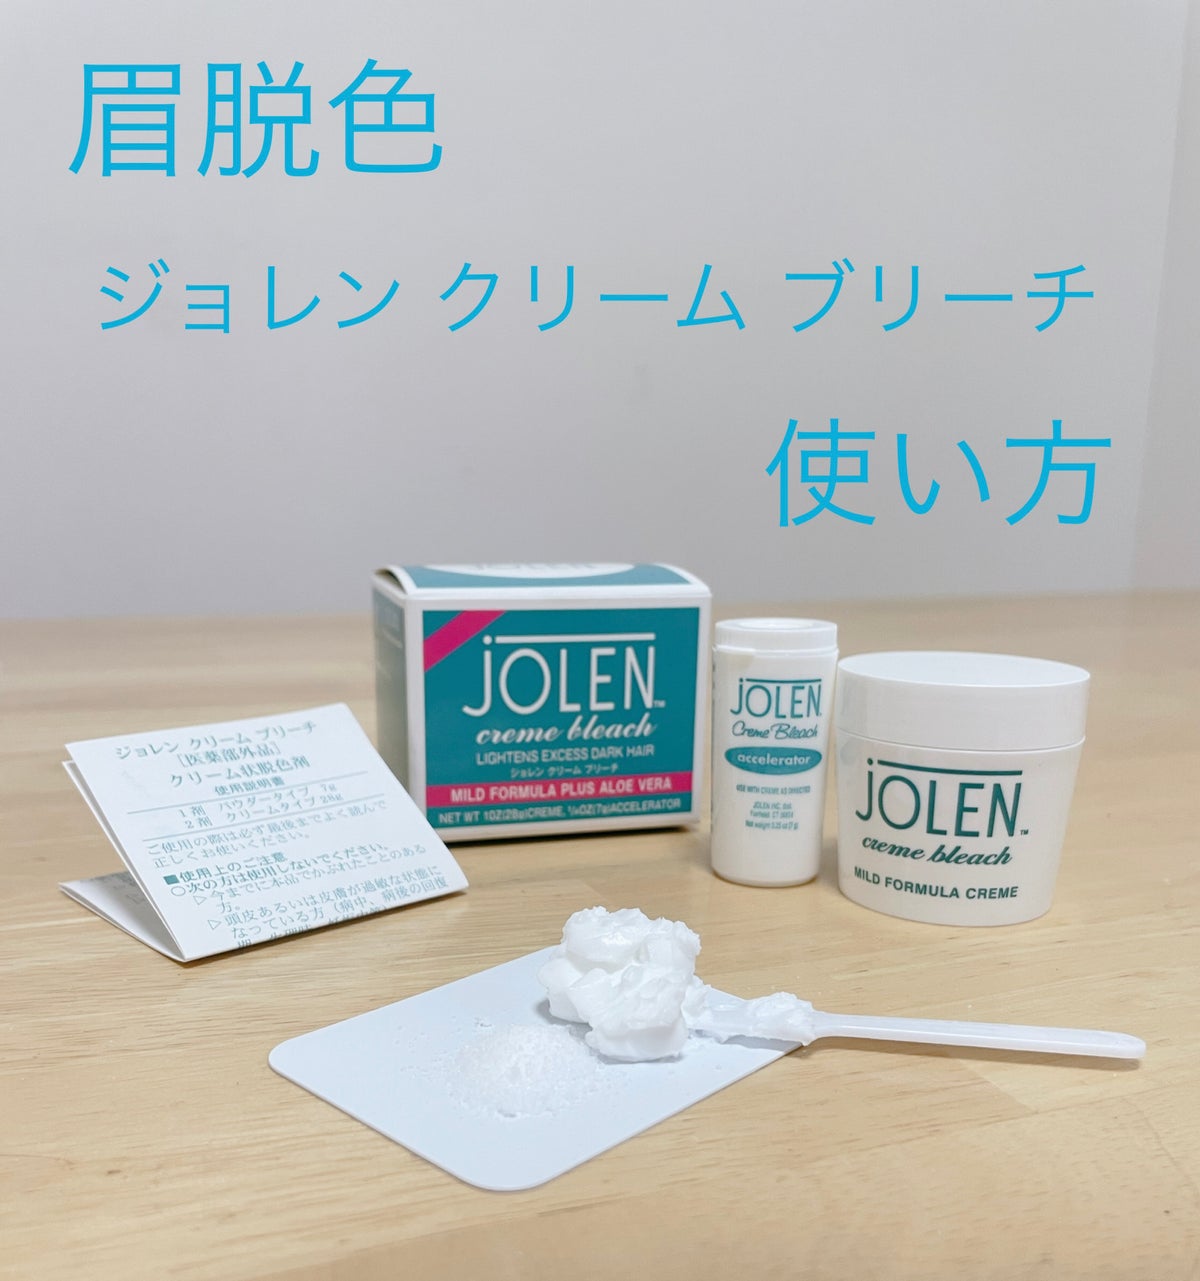 JOLEN ジョレンジャパン ジョレンクリームブリーチ - ヘアケア